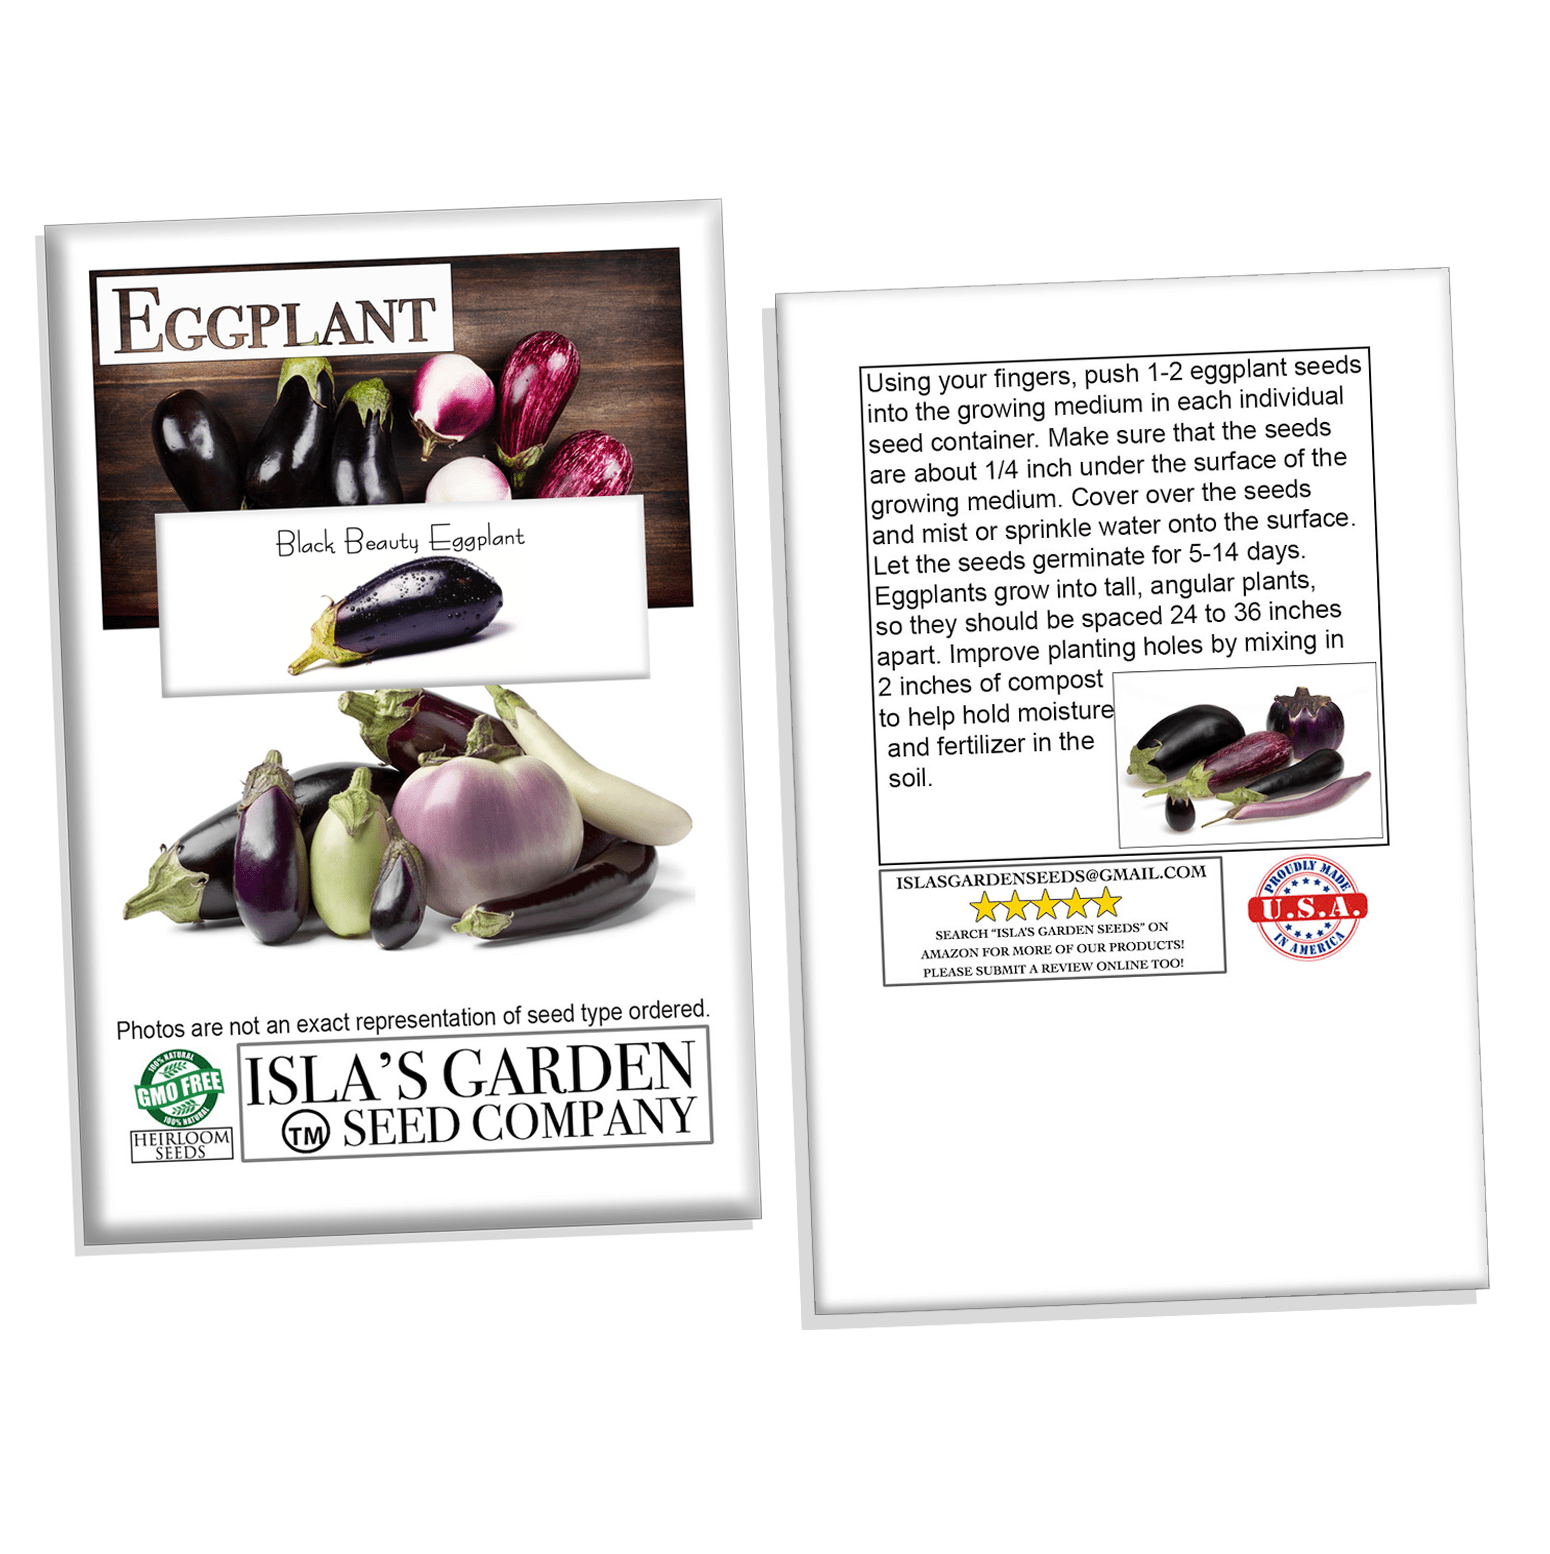 Berenjena - Black Beauty - 210 semillas - Solanum melongena – Garden Seeds  Market